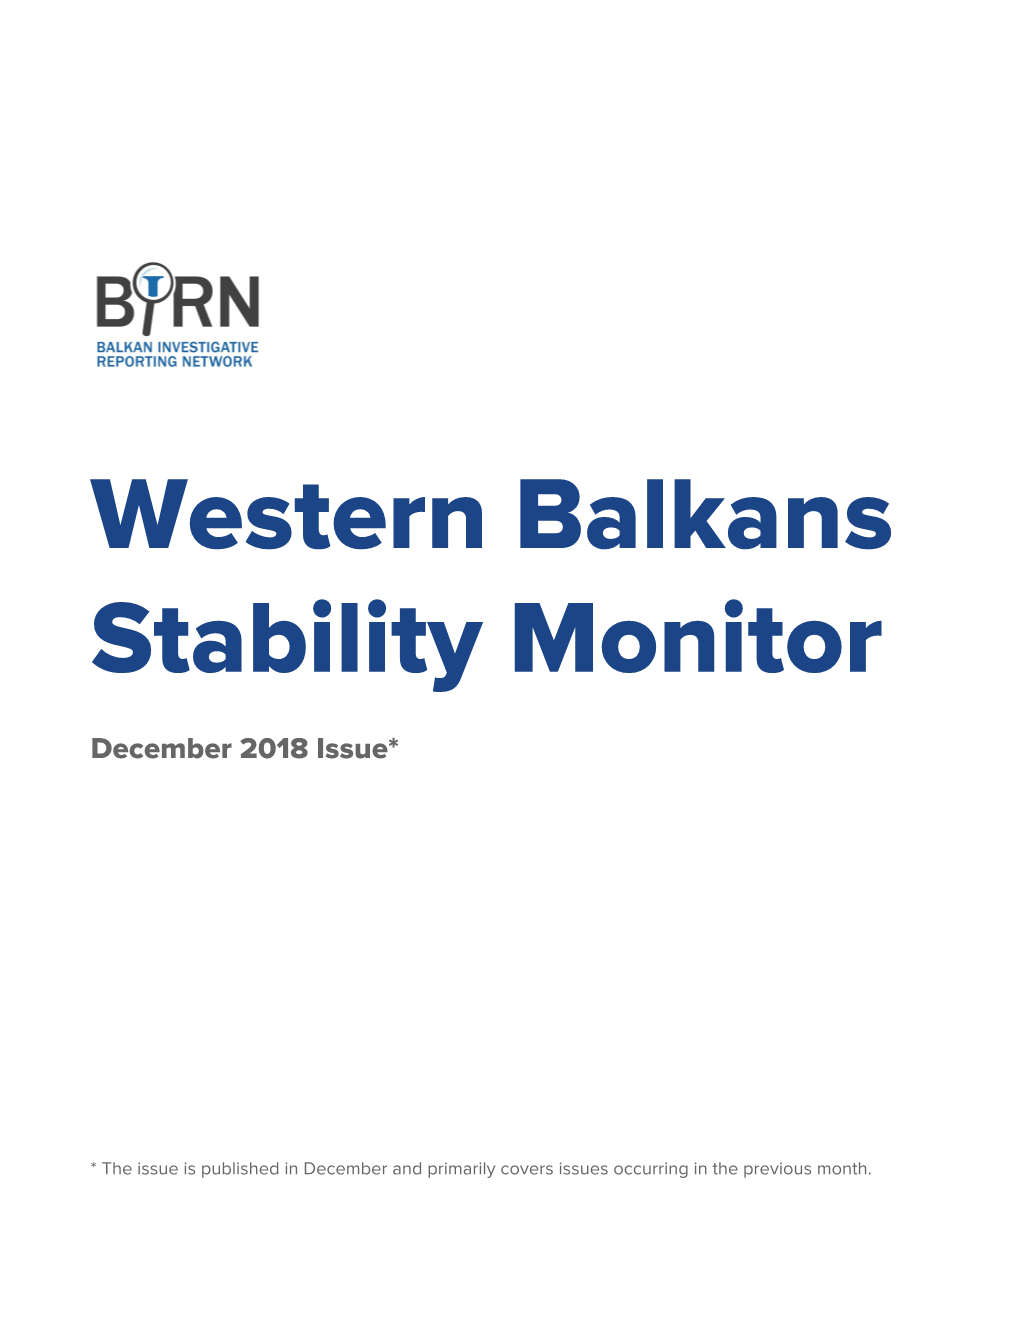 Western Balkans Stability Monitor